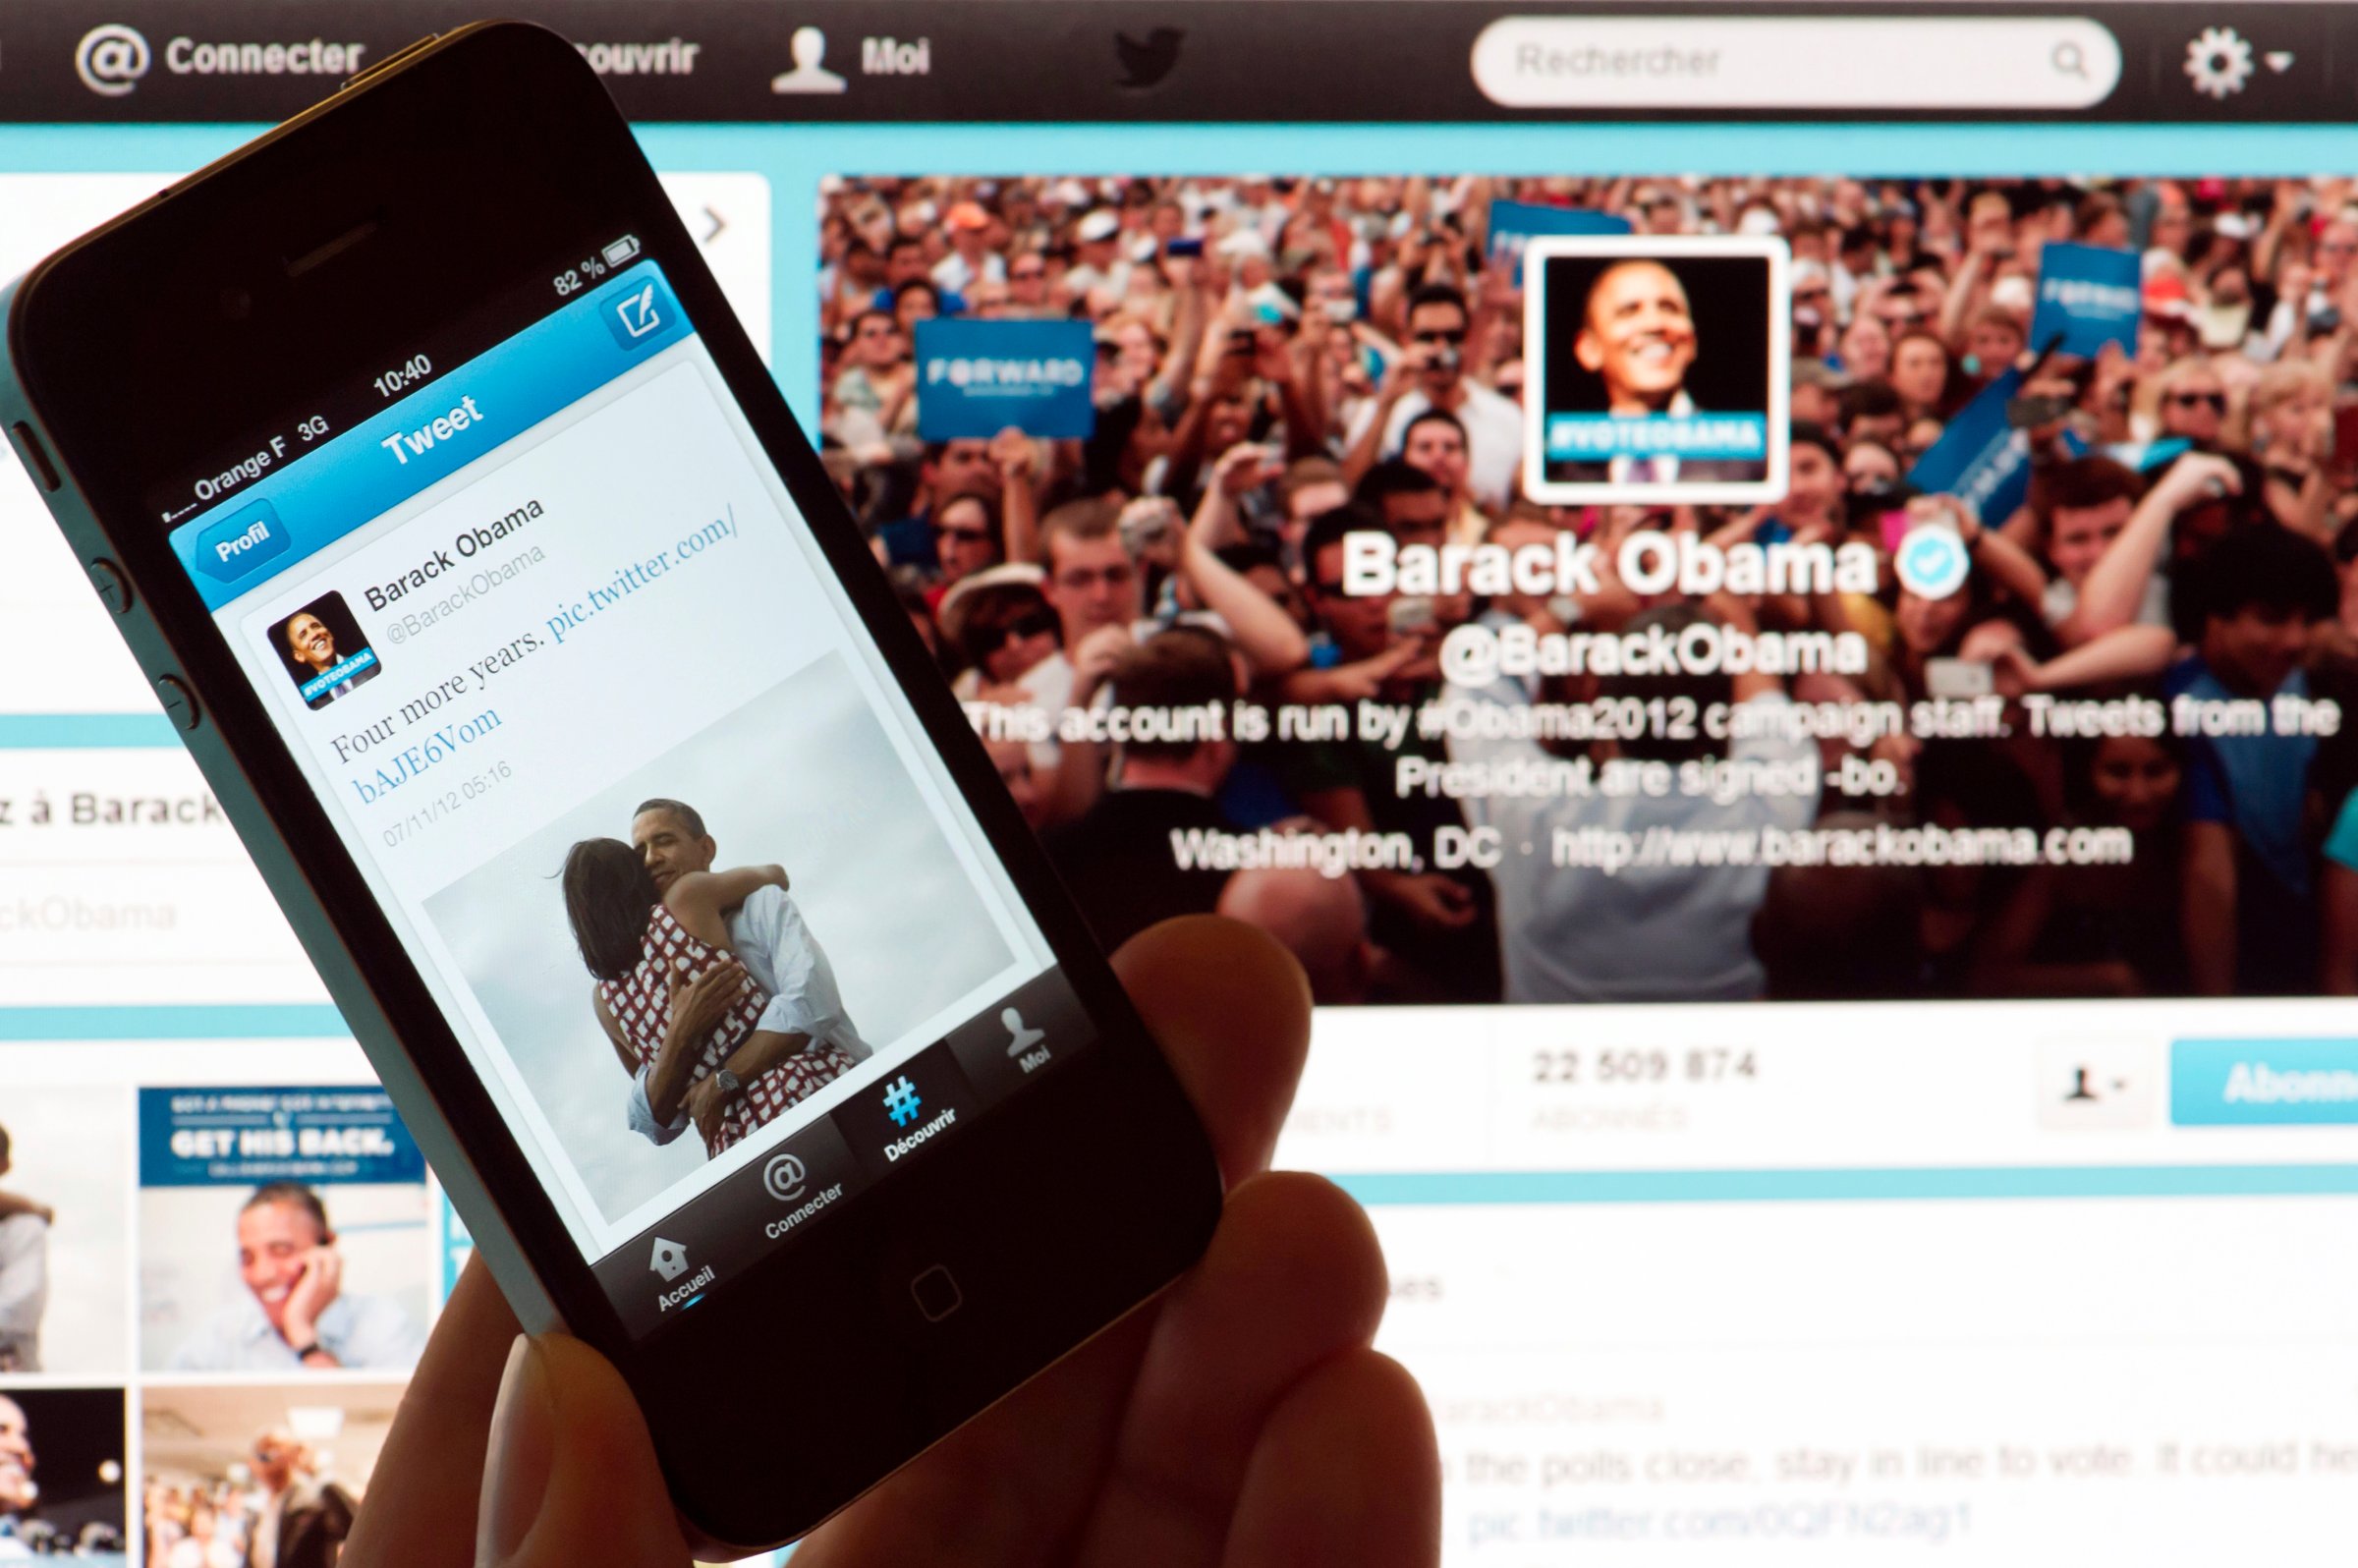 Barack Obama's tweets on Nov. 7, 2012 after his re-election as US president.